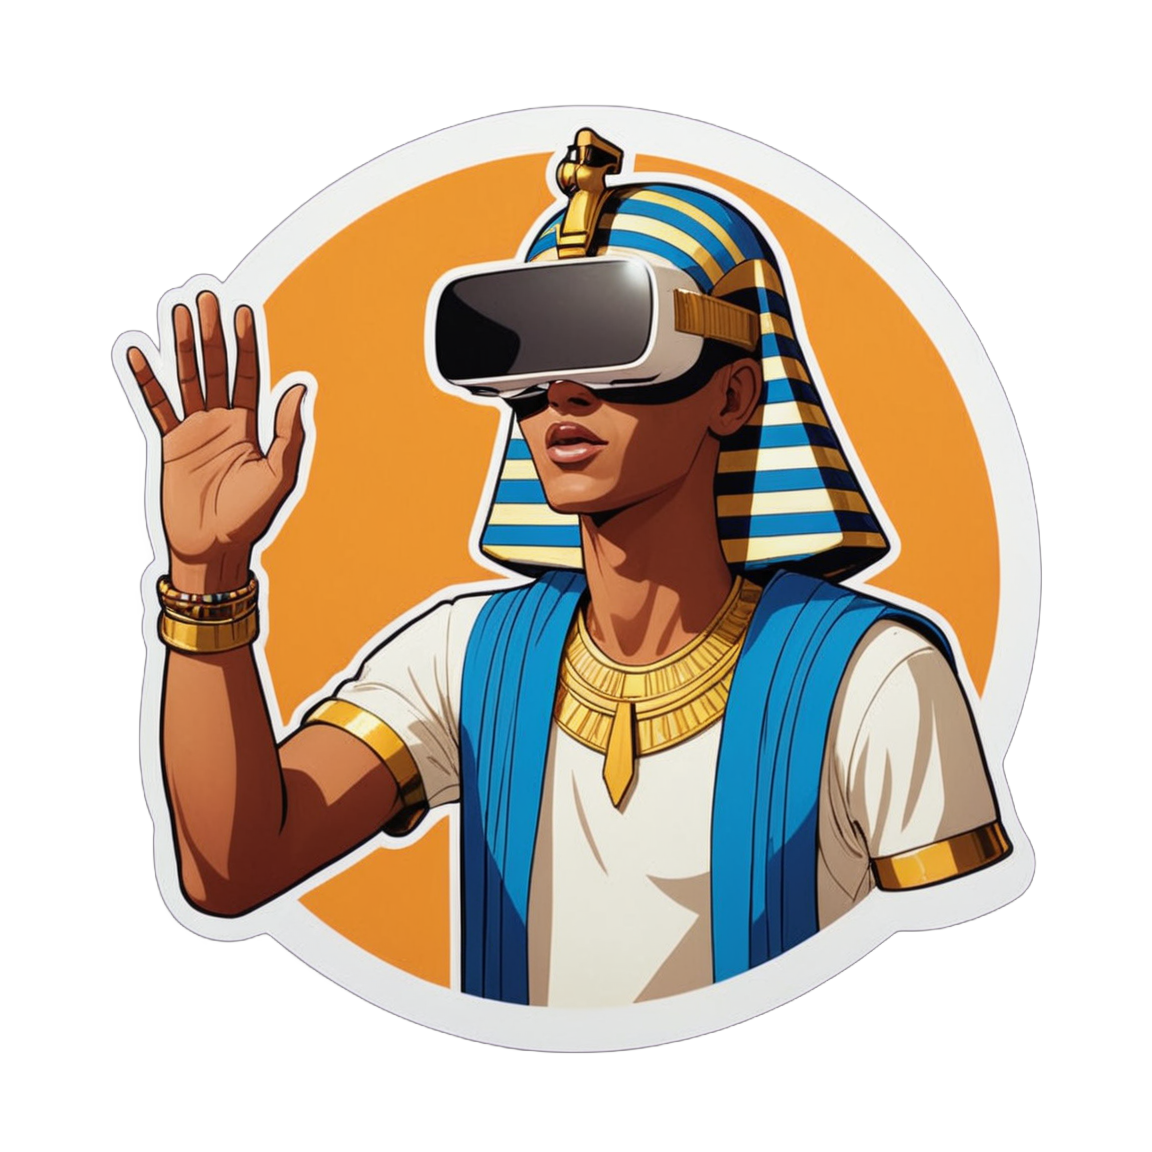 A pharaoh discovering virtual reality